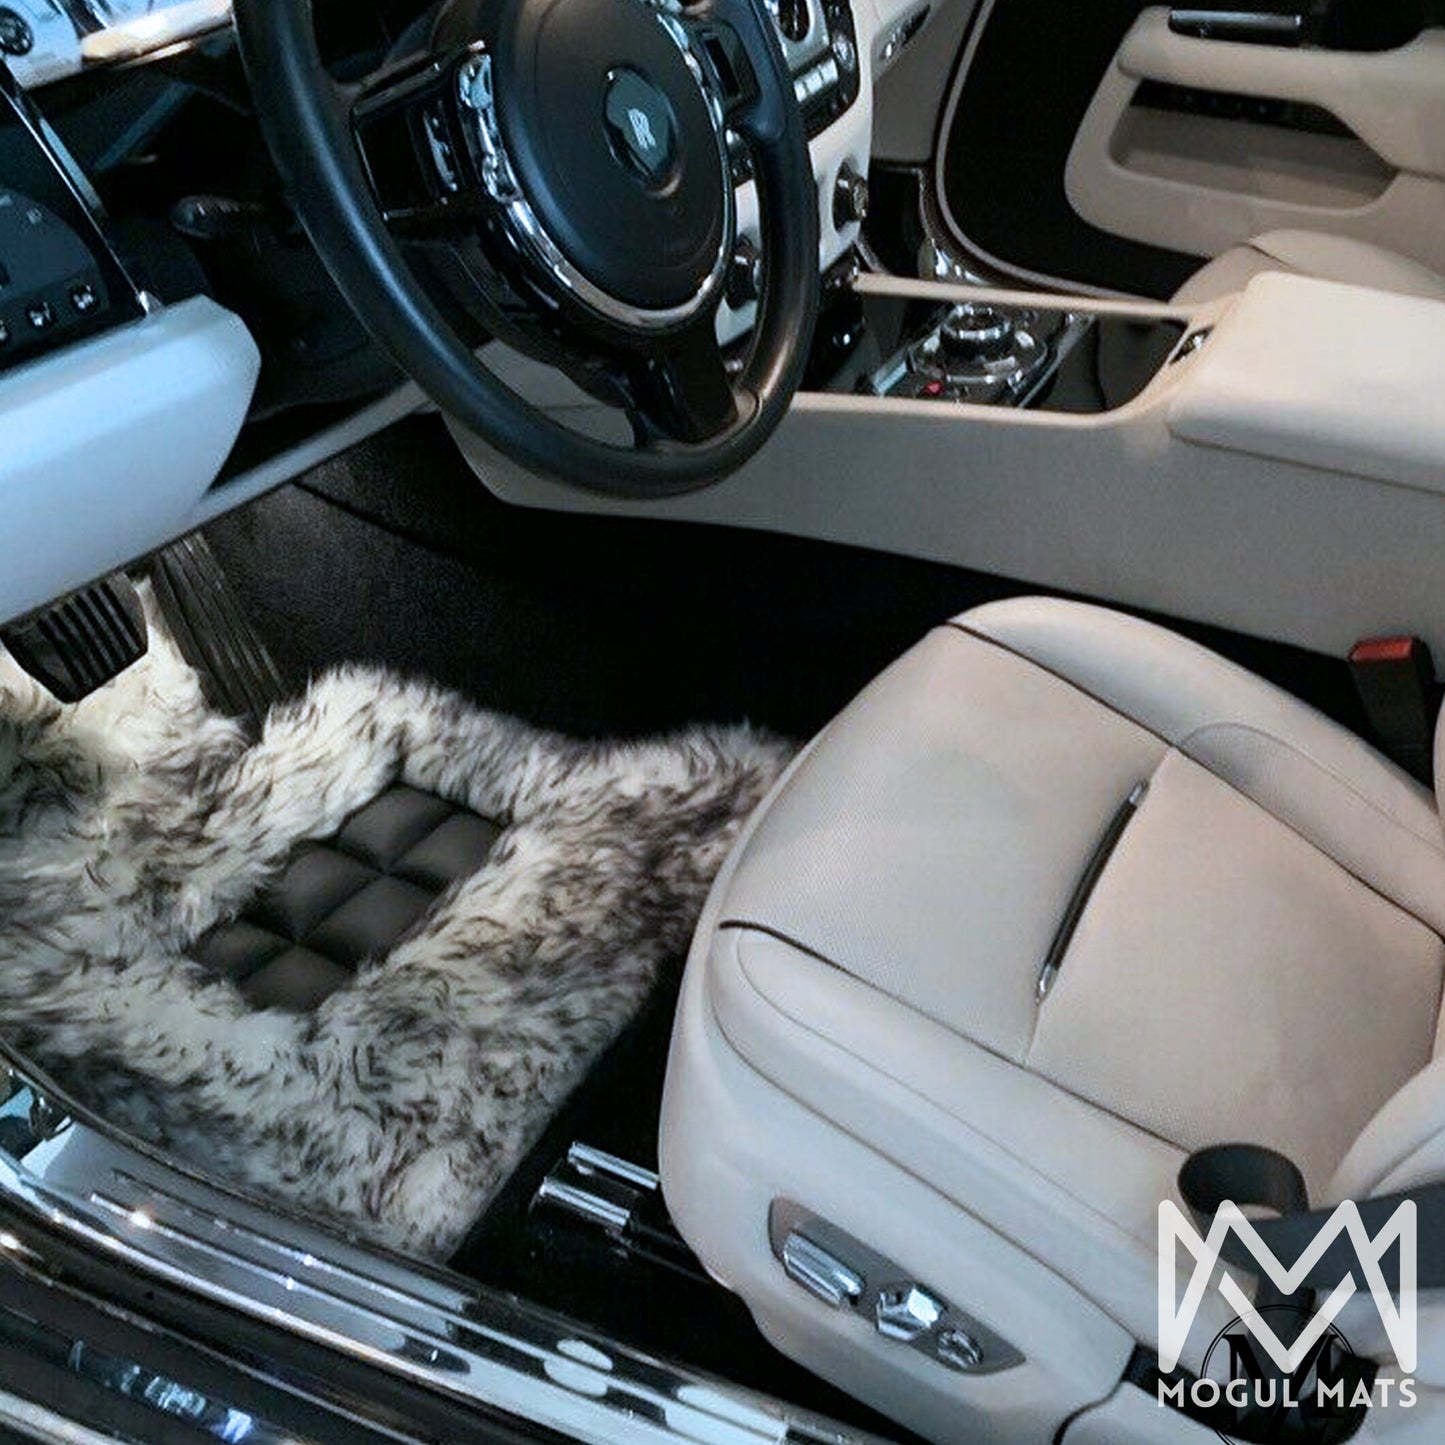 Mogul Mats Multi Color 4PC Sheepskin Floor Mats for Rolls Royce Cullinan